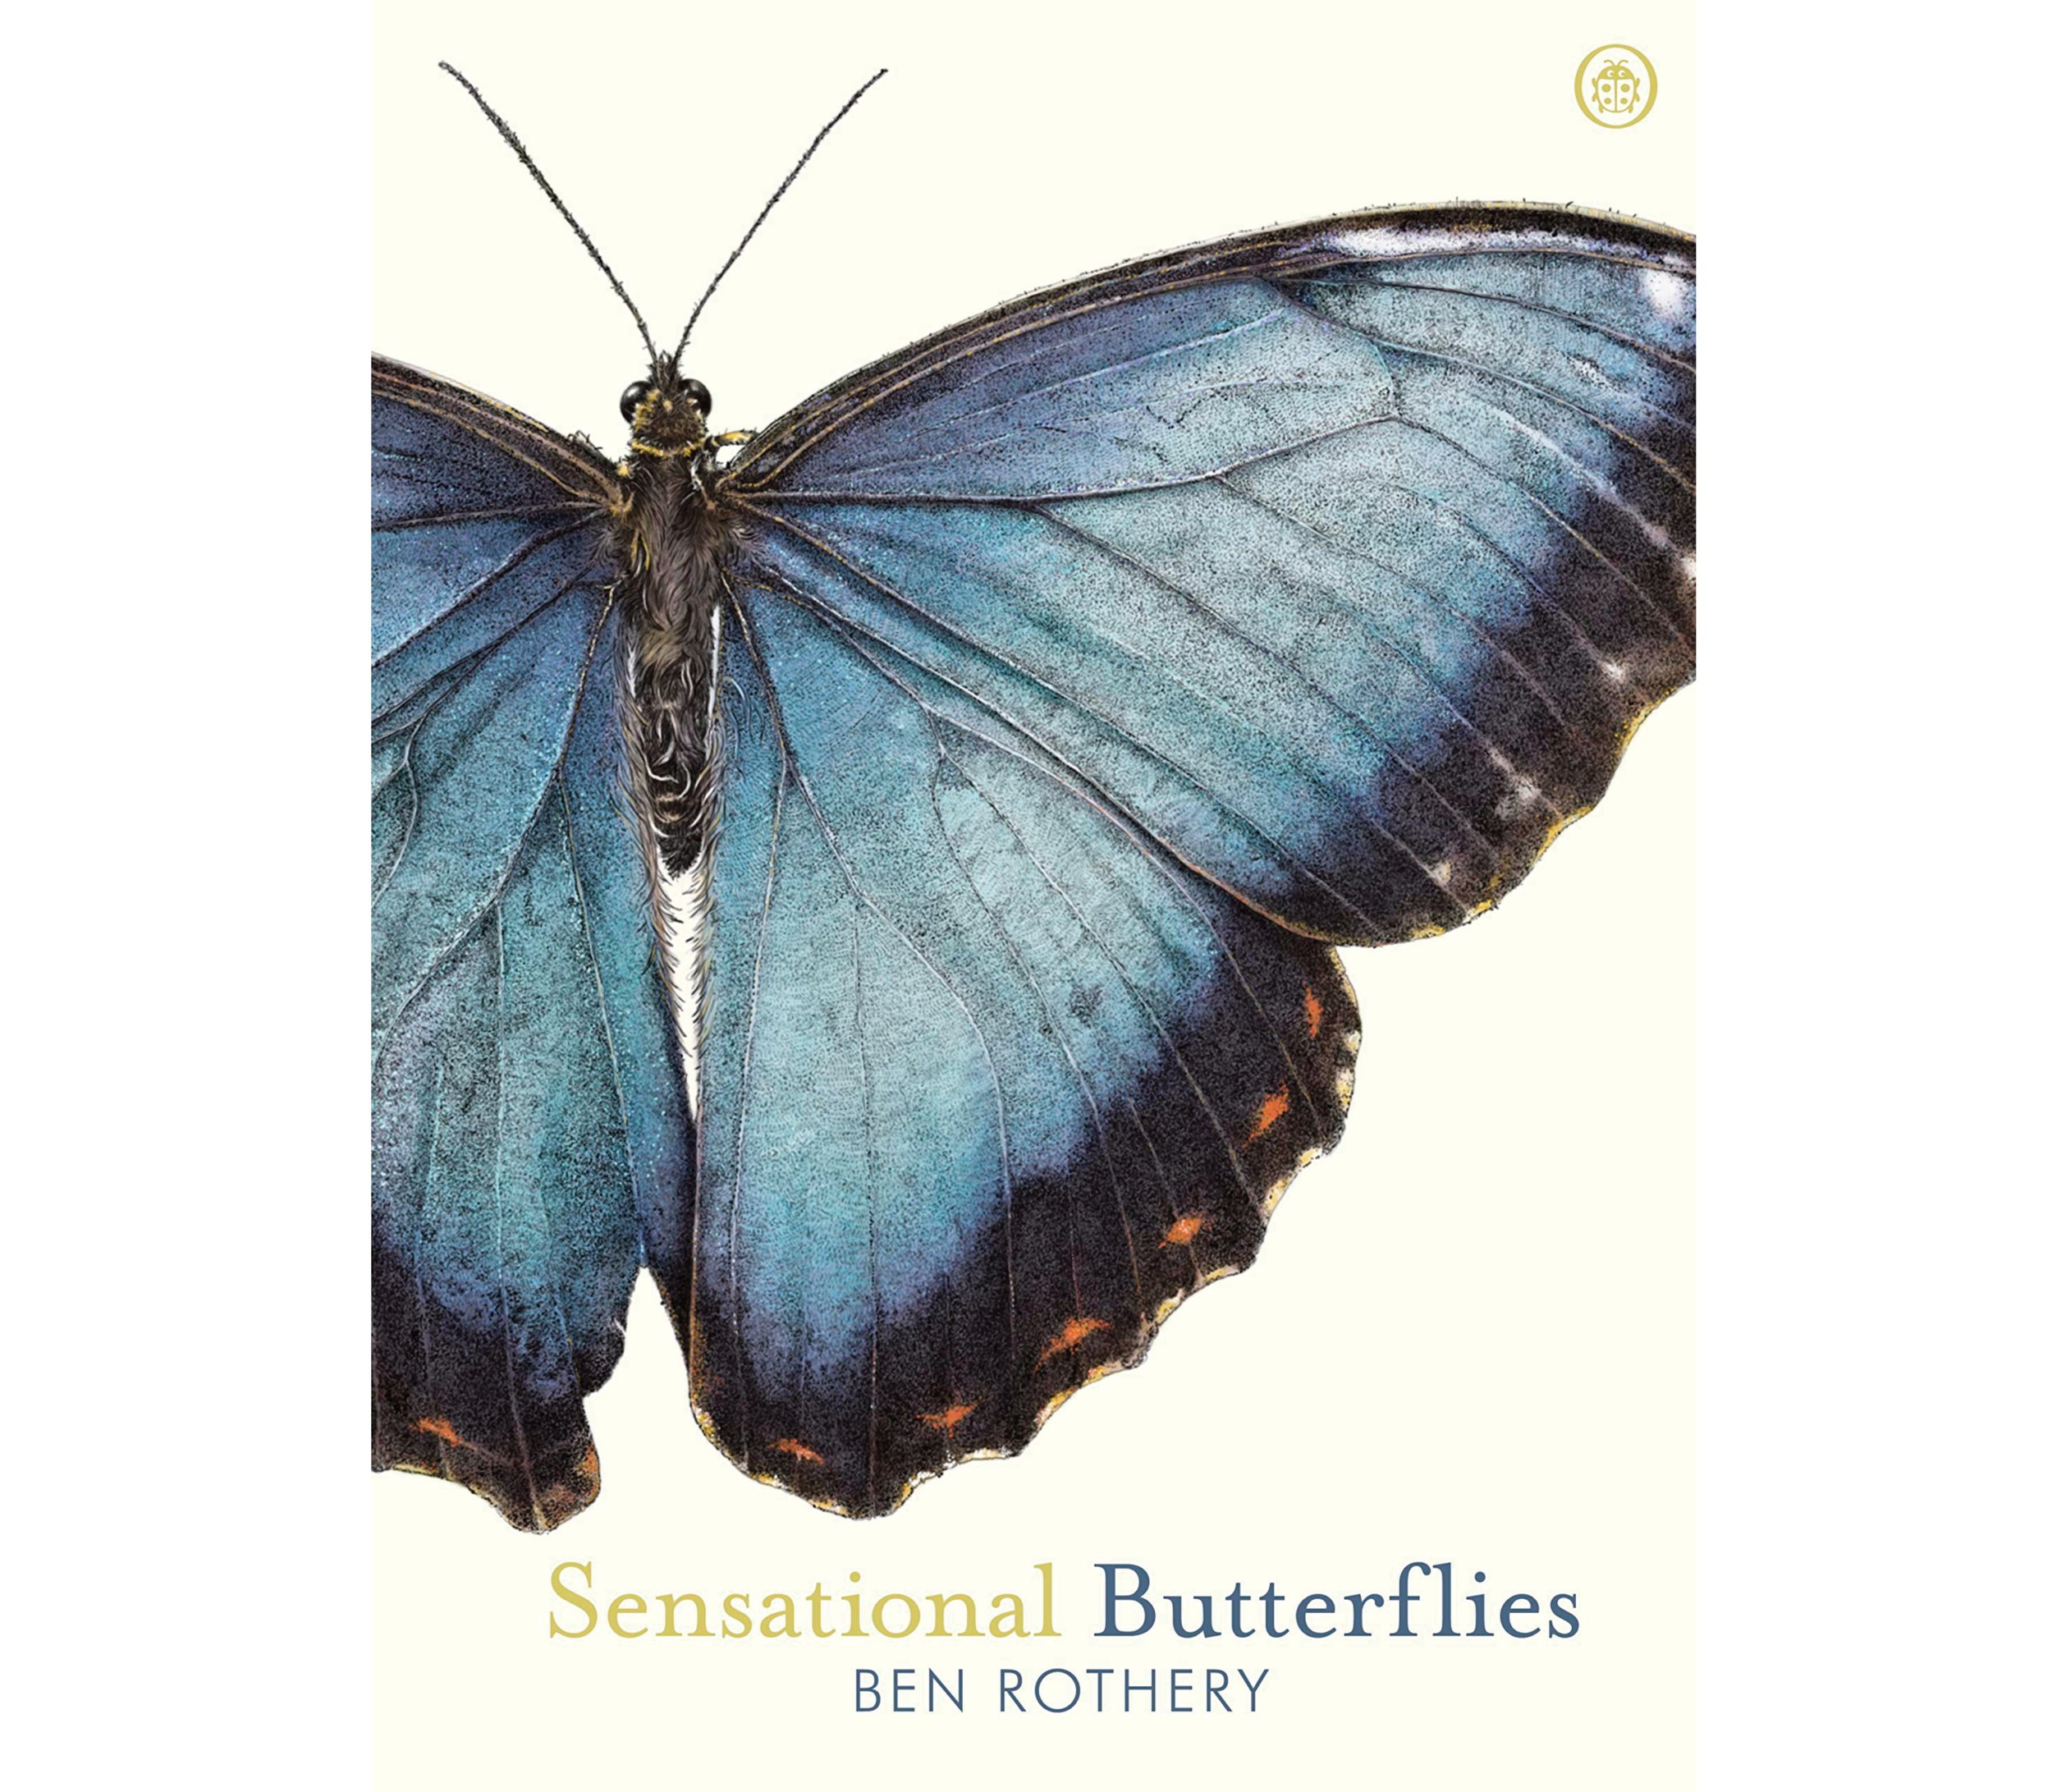 ben-rothery-sensational-butterflies-cover-illustration.jpg